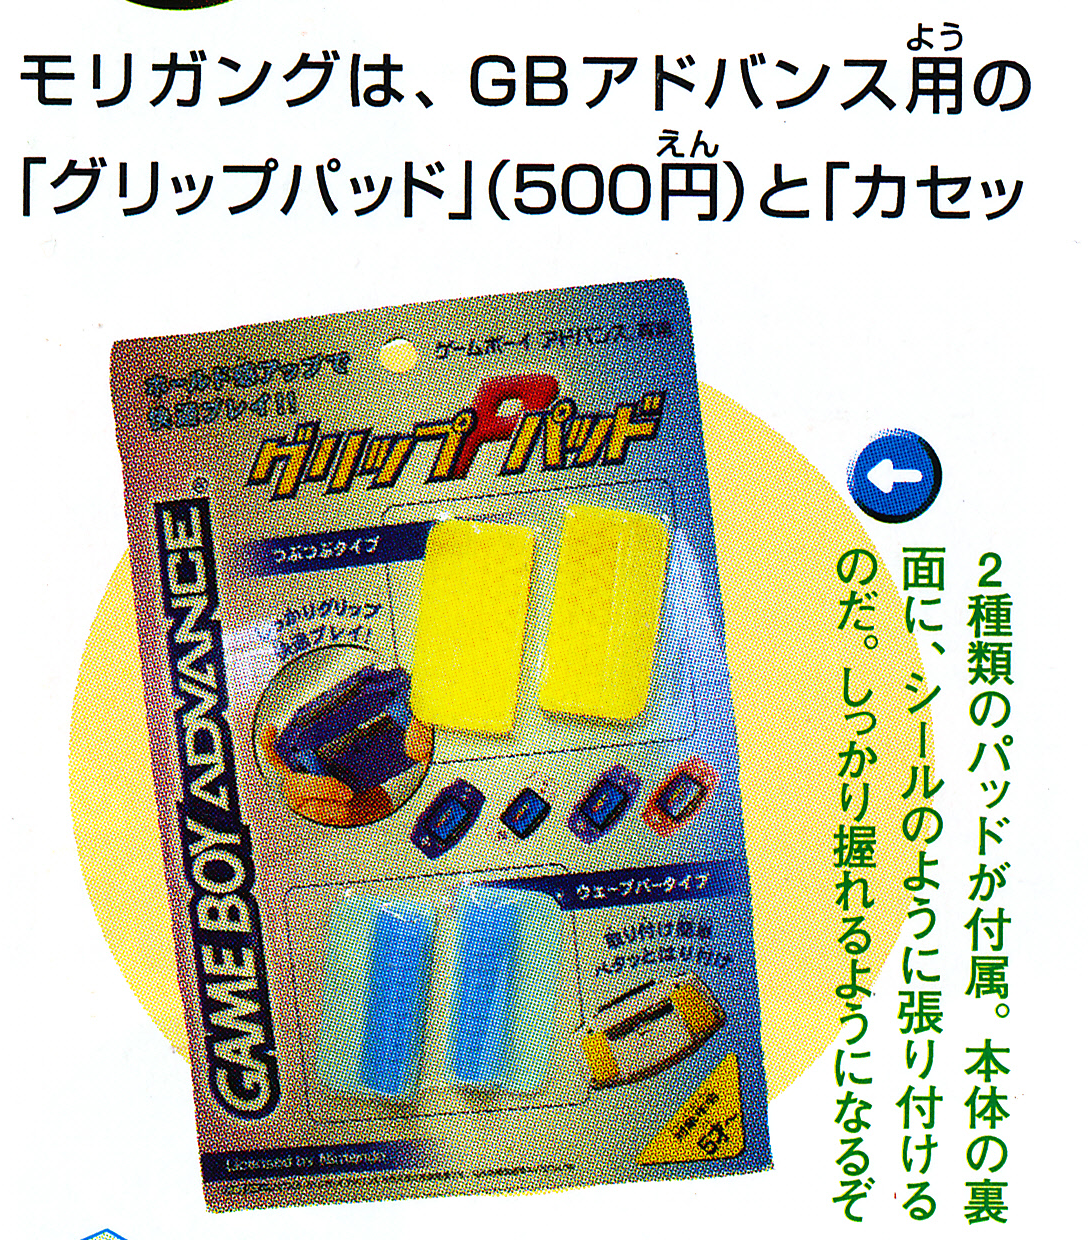  Nintendo Game Boy Advance Morigang Grip Pads [JP]